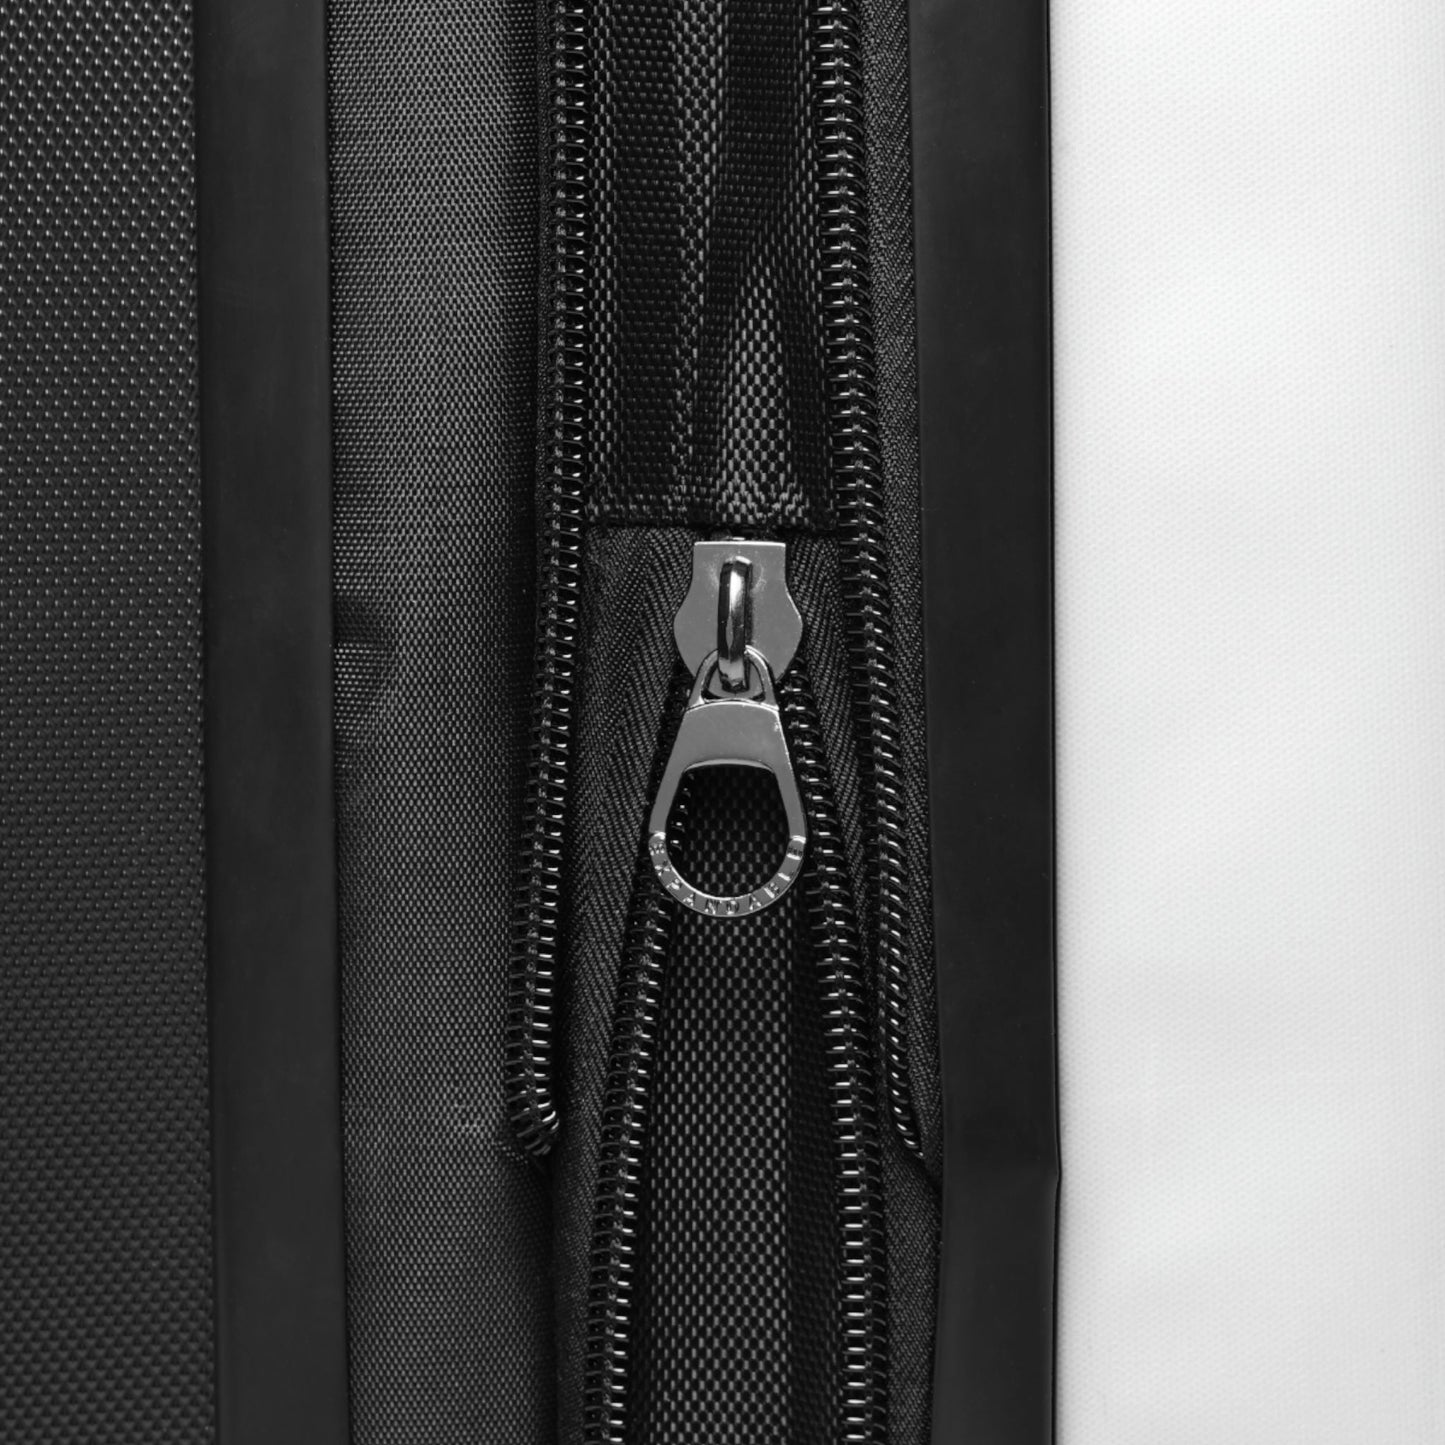 NOSTALGIATONE MAX Suitcases | CANAANWEAR | Luggage | NOSTALGIATONE